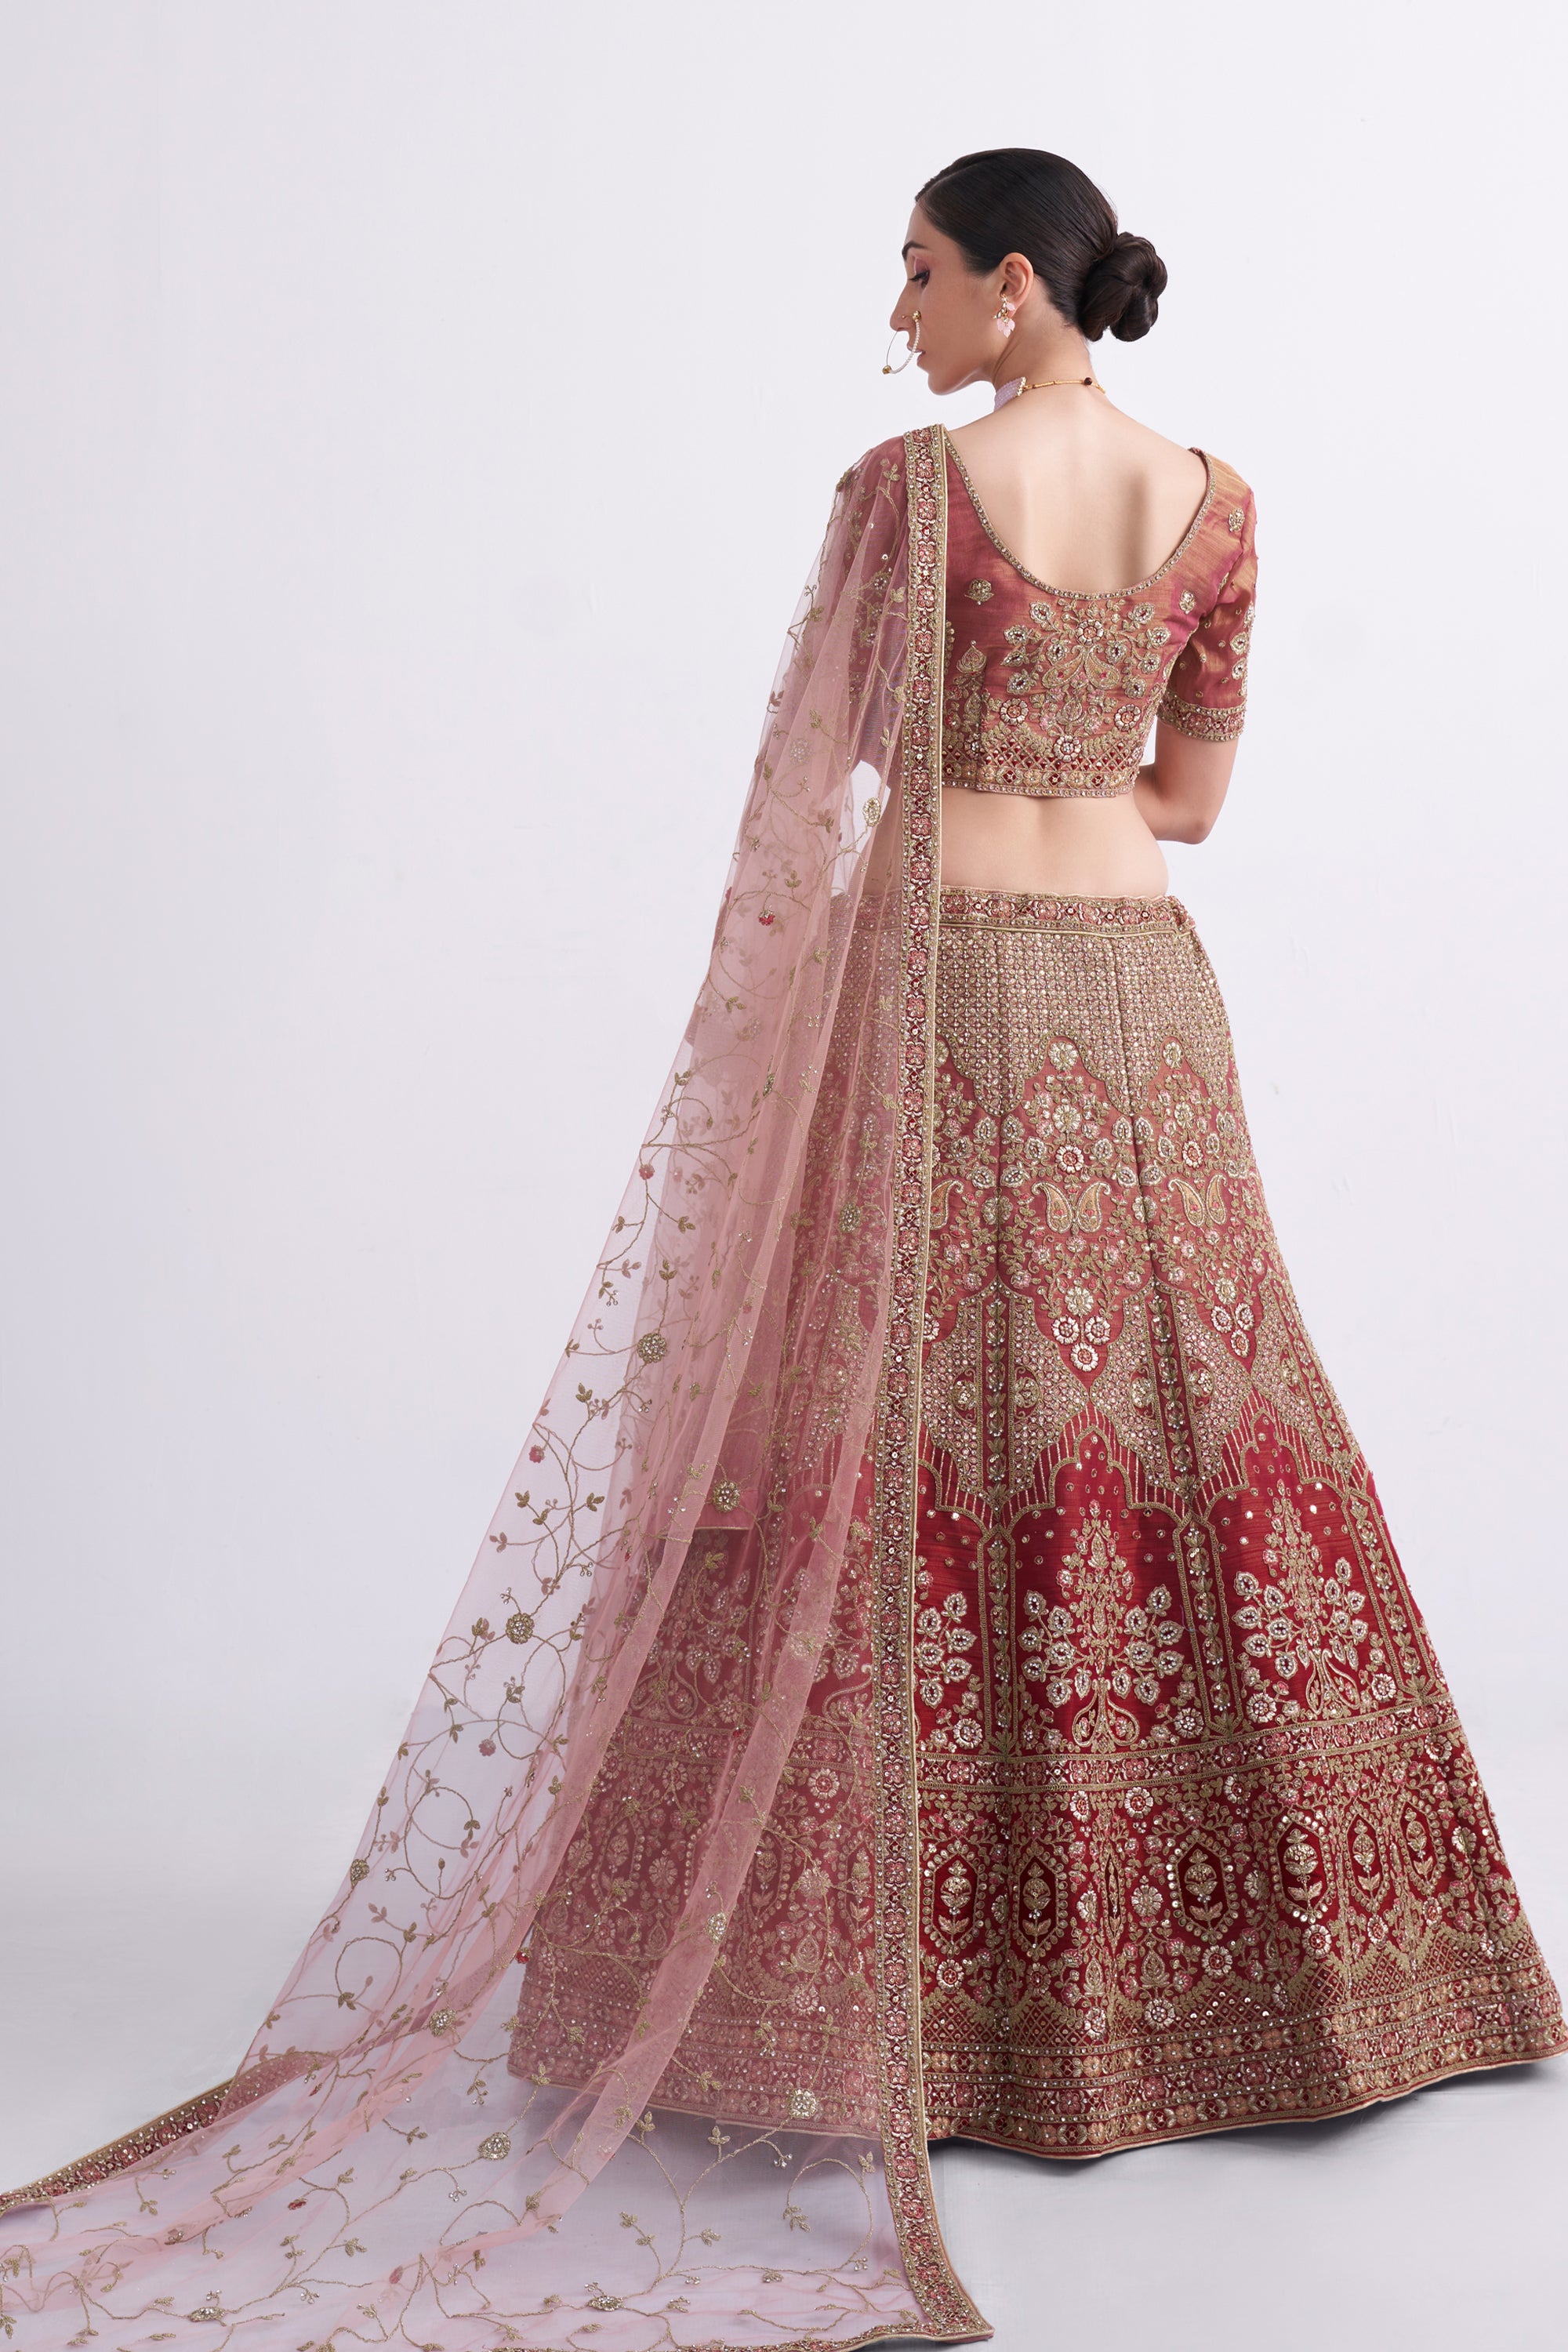 Women's Bridal Heritage Shaded Rust Heavy Embroidered Shaded Silk Designer Lehenga - CHITRAS